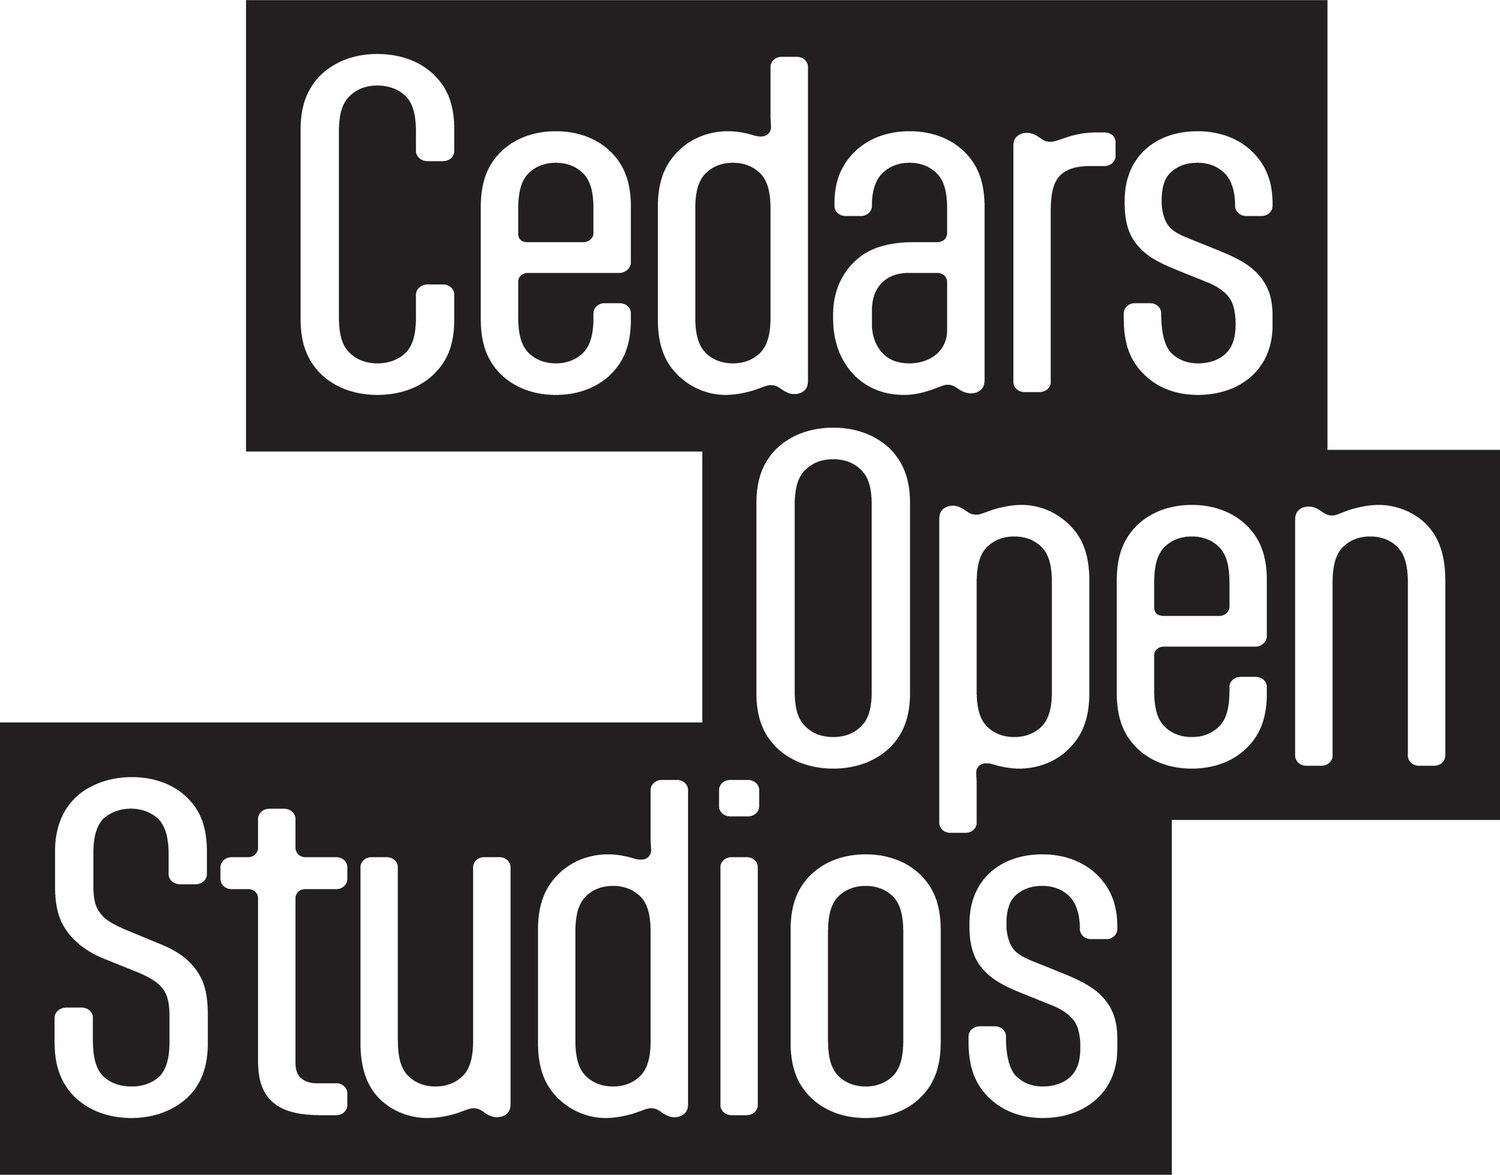 Cedars Open Studios